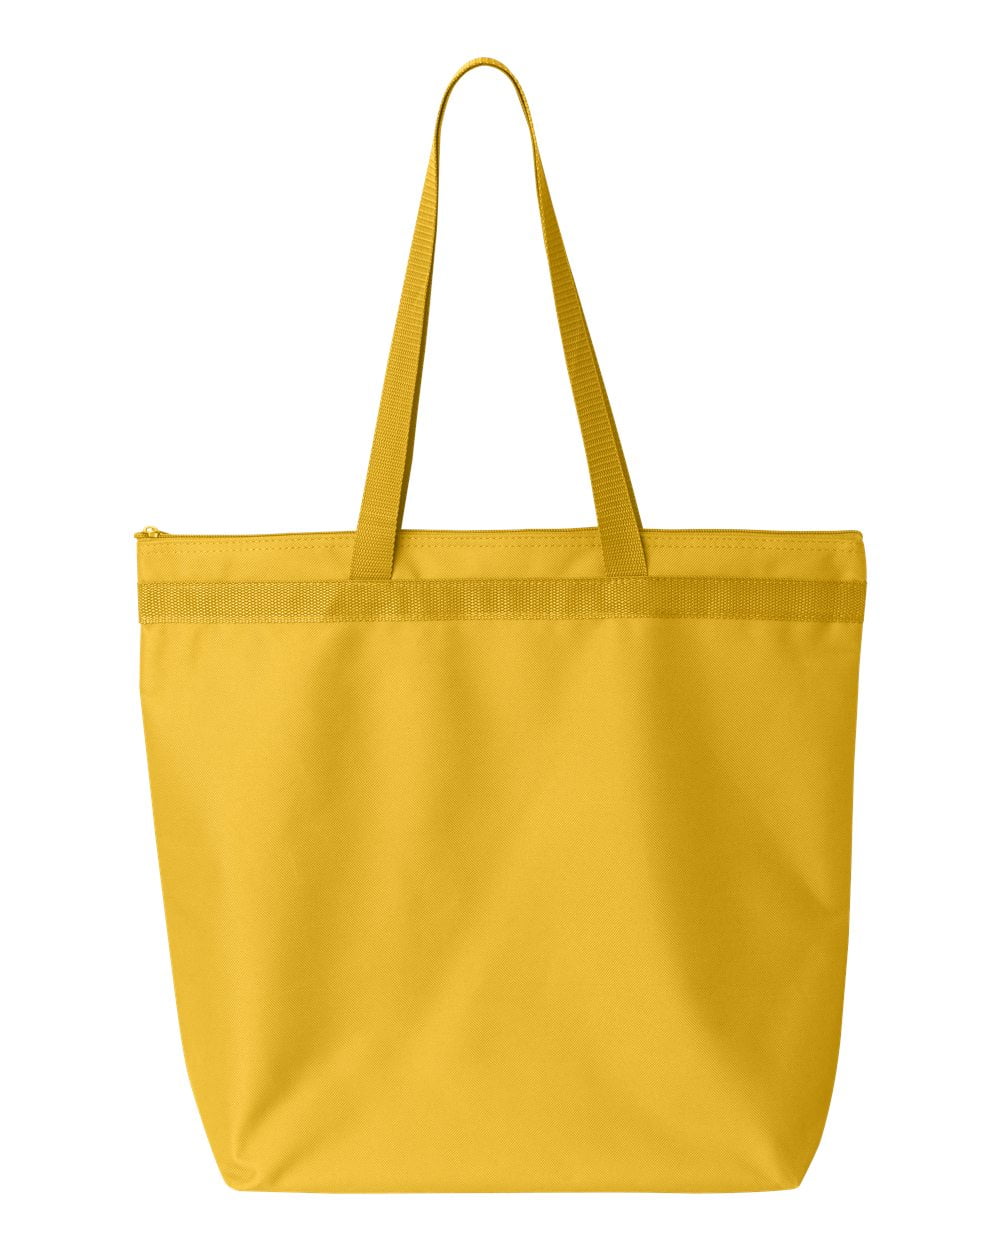 Coach - Authenticated Handbag - Cloth Multicolour Plain for Women, Good Condition